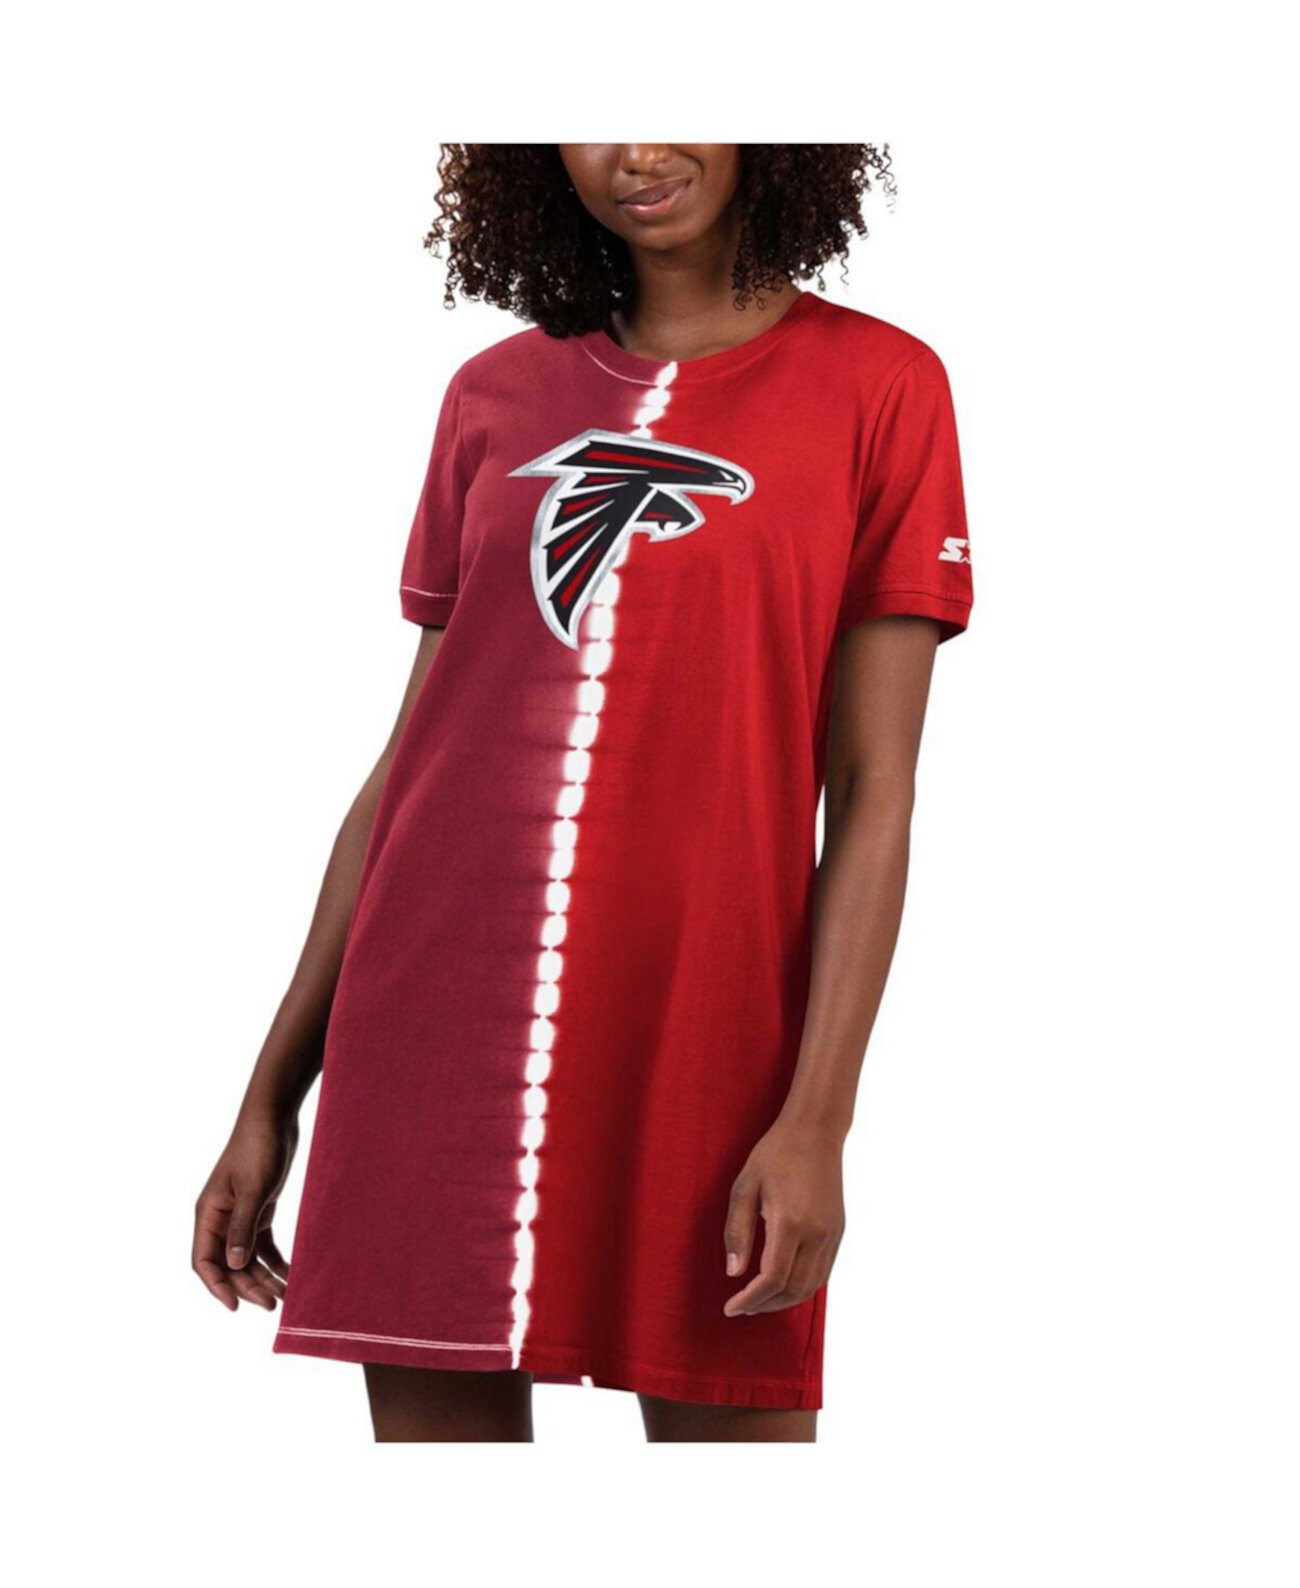 Women's Red Atlanta Falcons Ace Tie-Dye T-shirt Dress Starter